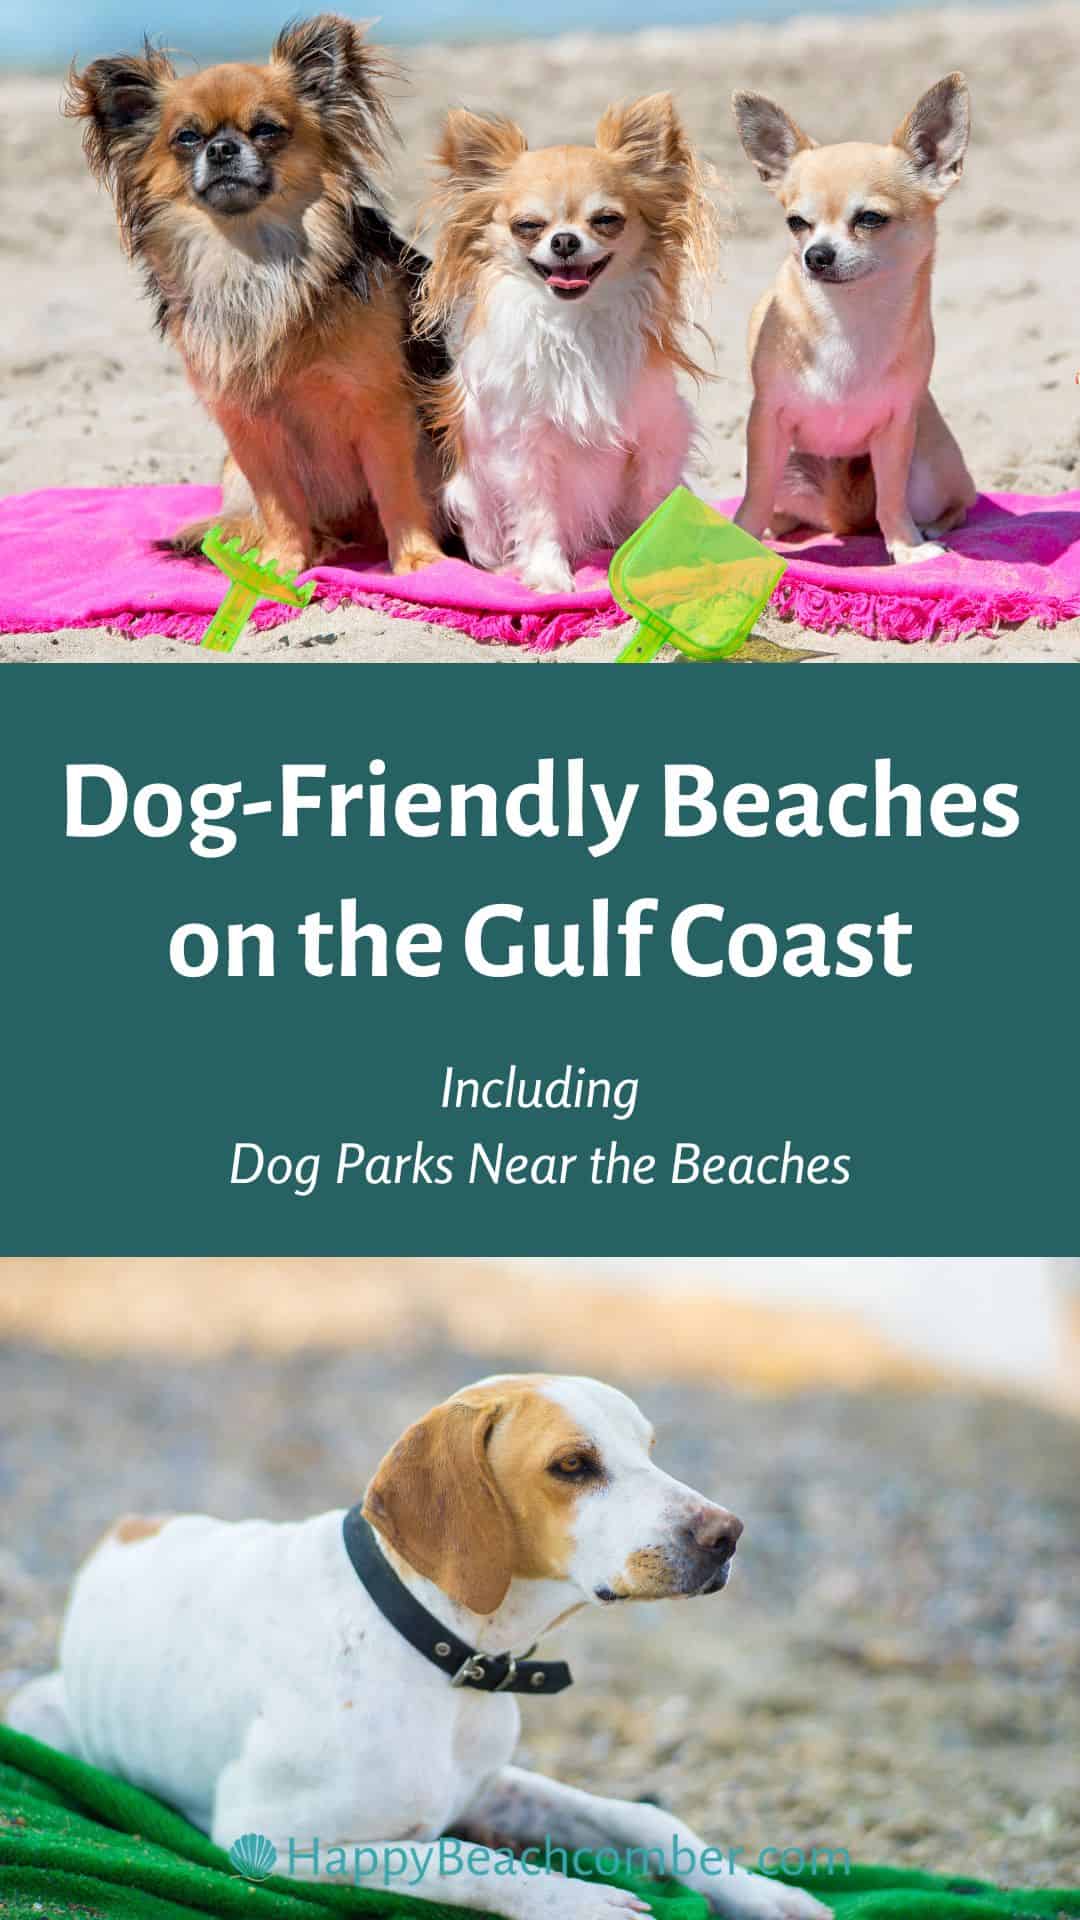 Dog-Friendlly Beaches on the Gulf Coast